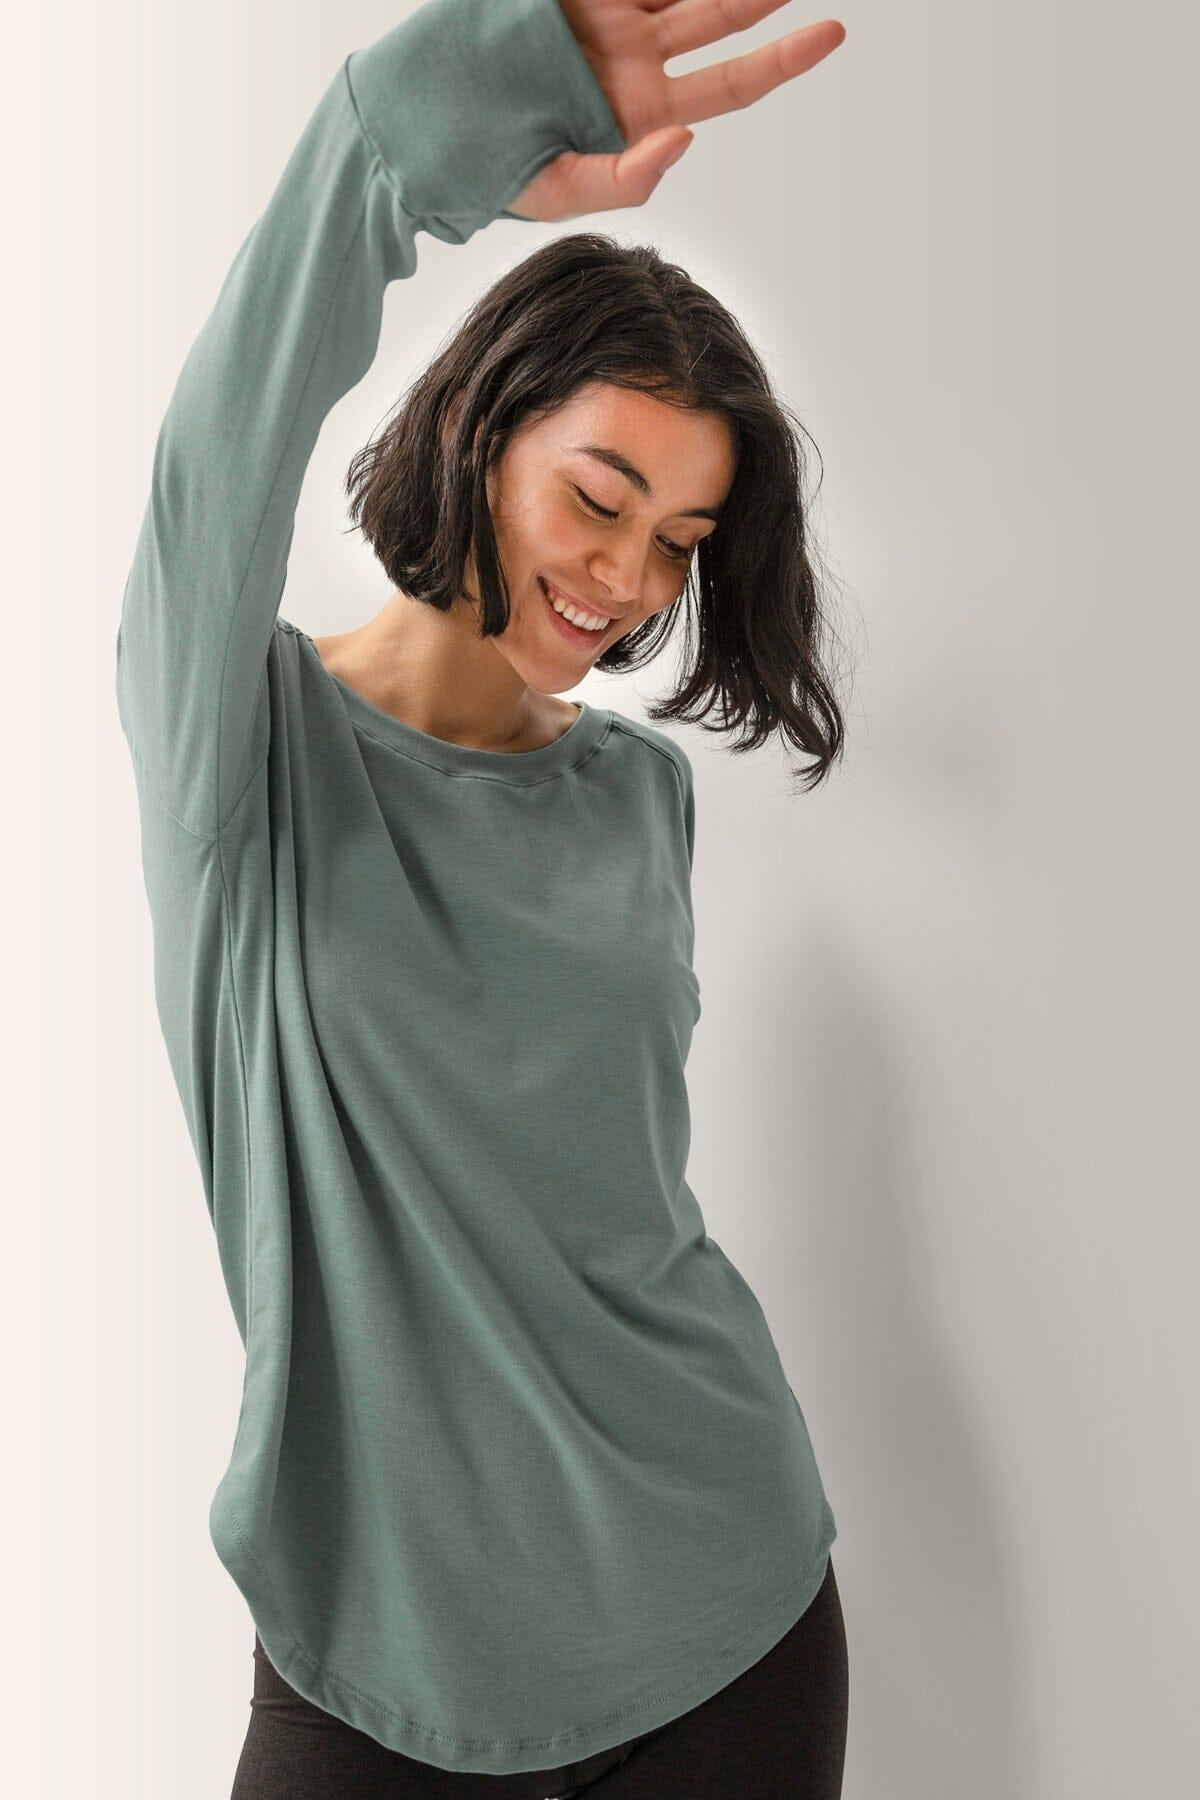 Femme qui porte le chandail à manche longue Cozy de Rose Boreal./ Women wearing the Cozy Long Sleeve Shirt by Rose Boreal. -Jade